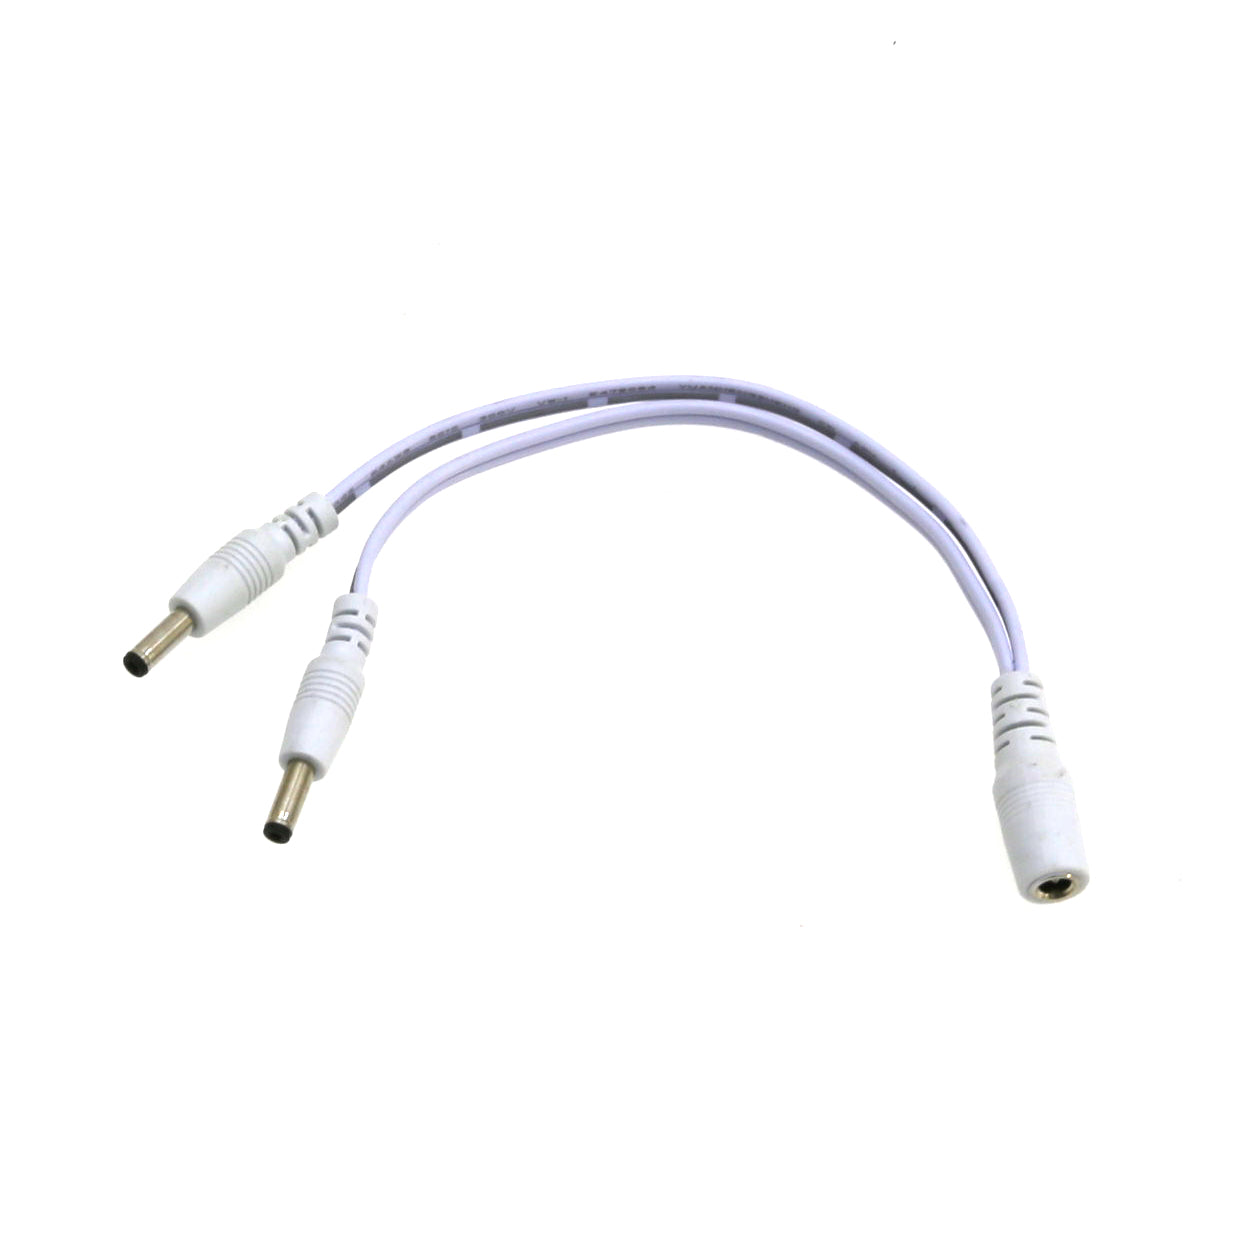 6 inch Interconnect Splitter Cable for Modular LED Under Cabinet Lighting (White)